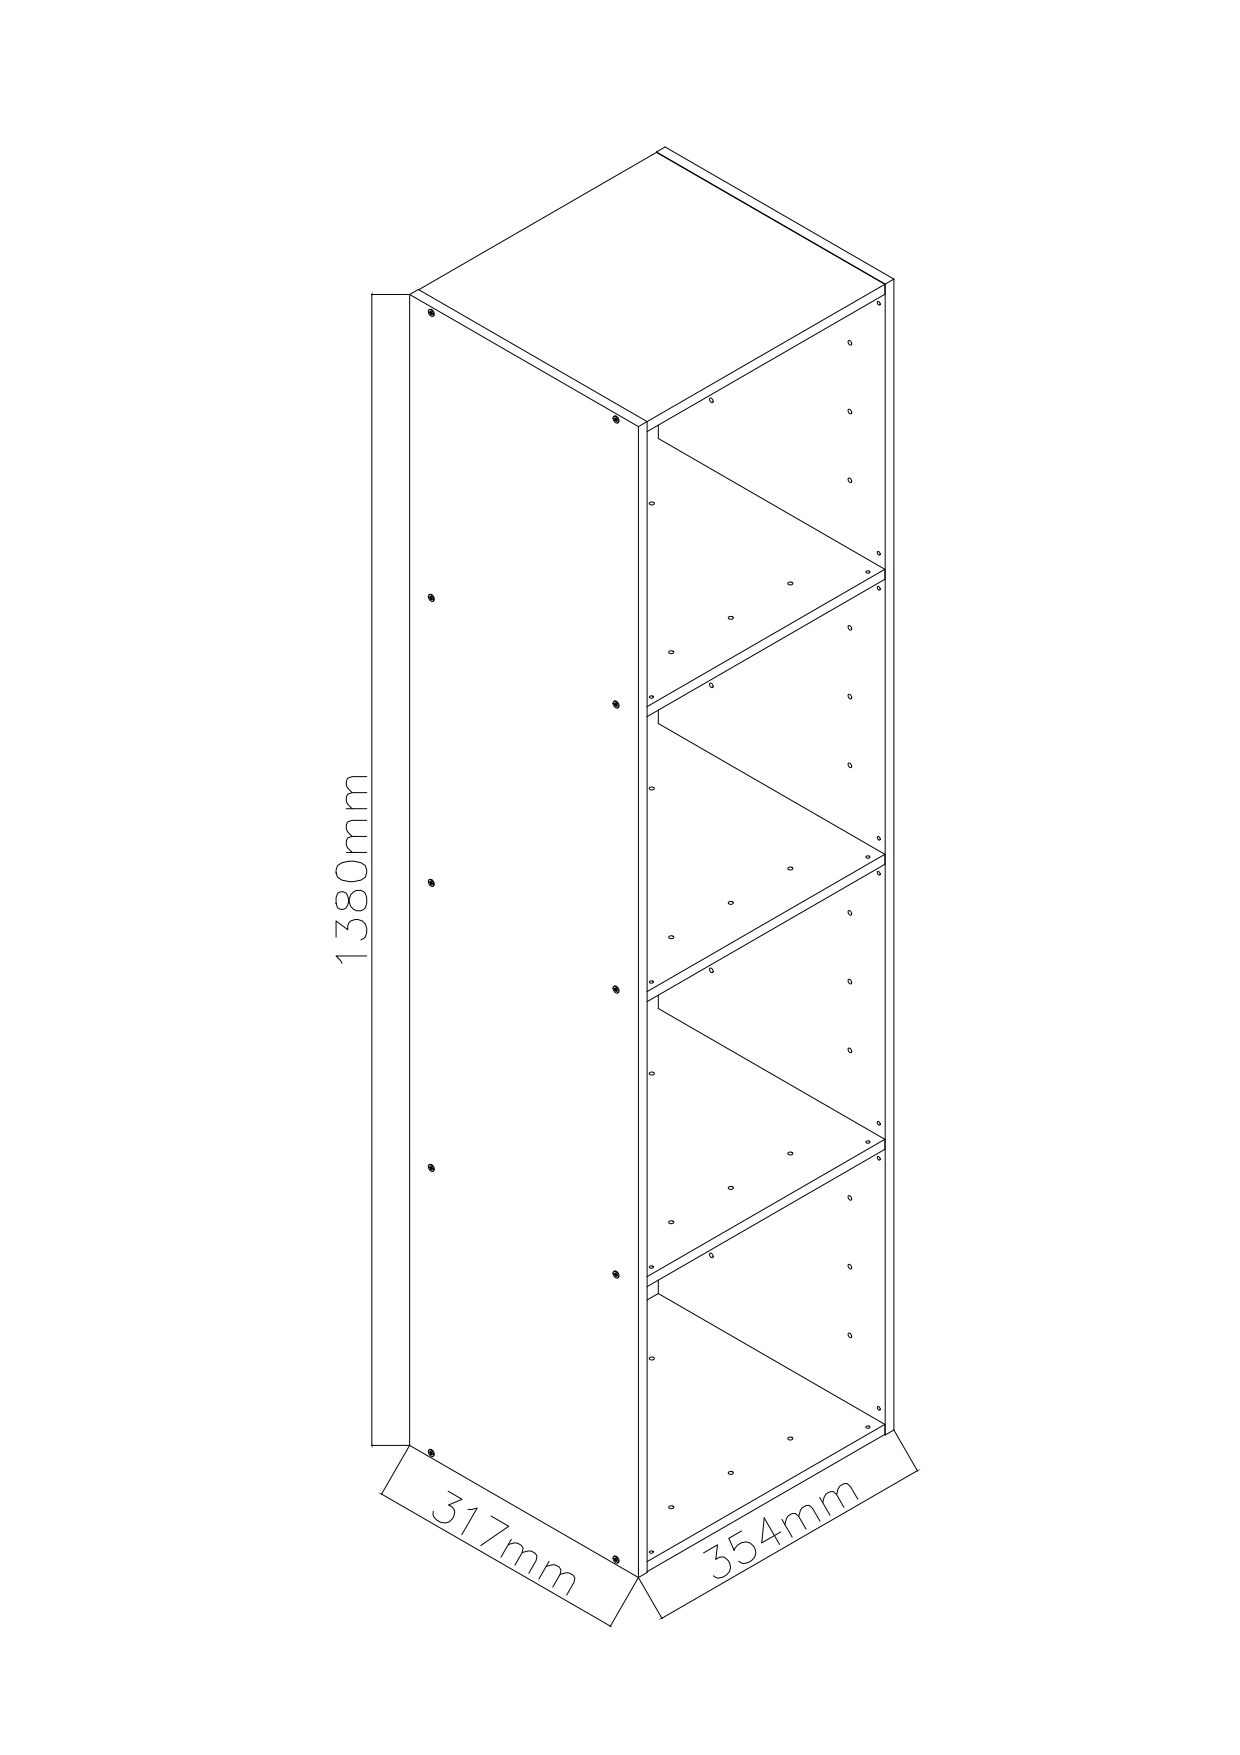 GoodHome Konnect Oak effect 4 shelf Cube Bookcase, (H)1380mm (W)354mm